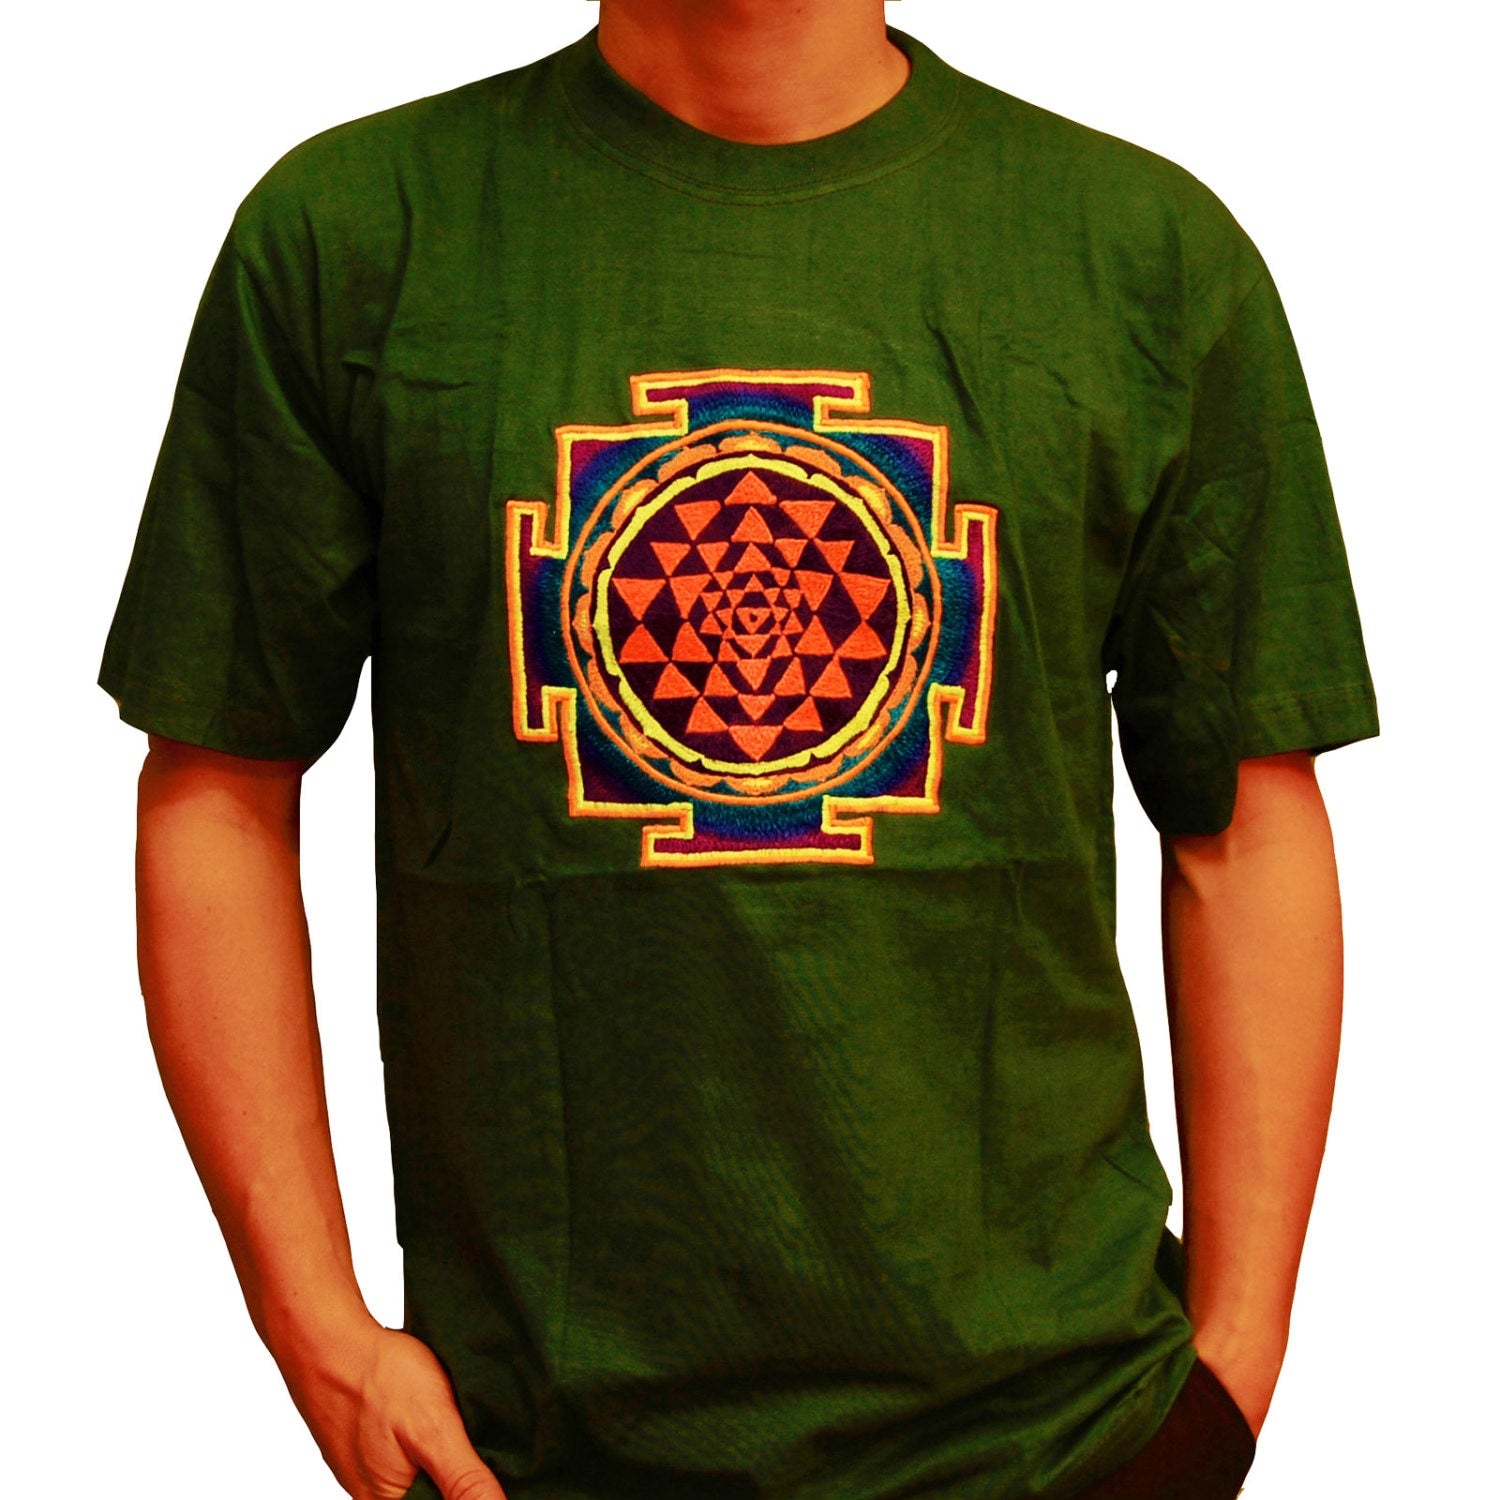 Shri Yantra T-Shirt - sacred healing yantra from india handmade embroidery no print